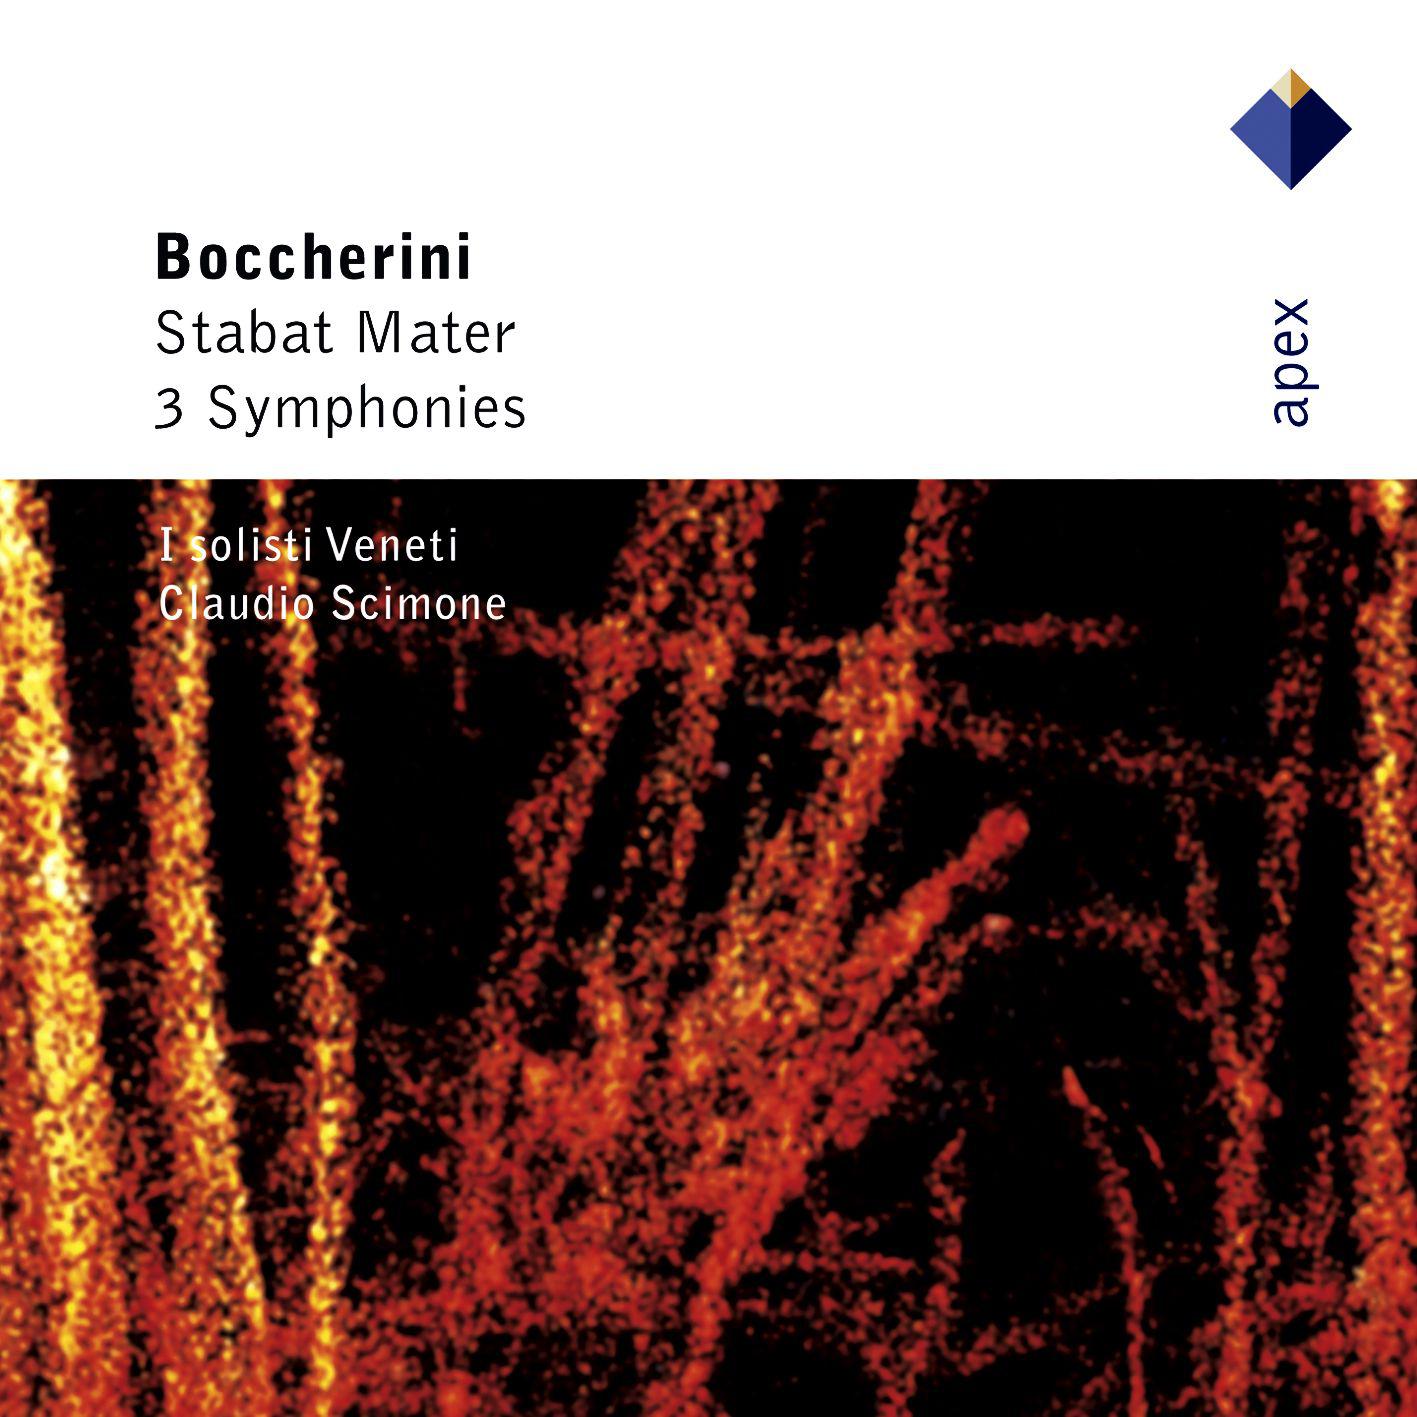 Boccherini : Symphony No.4 in A major Op.37 G518 : II Minuetto - Allegro